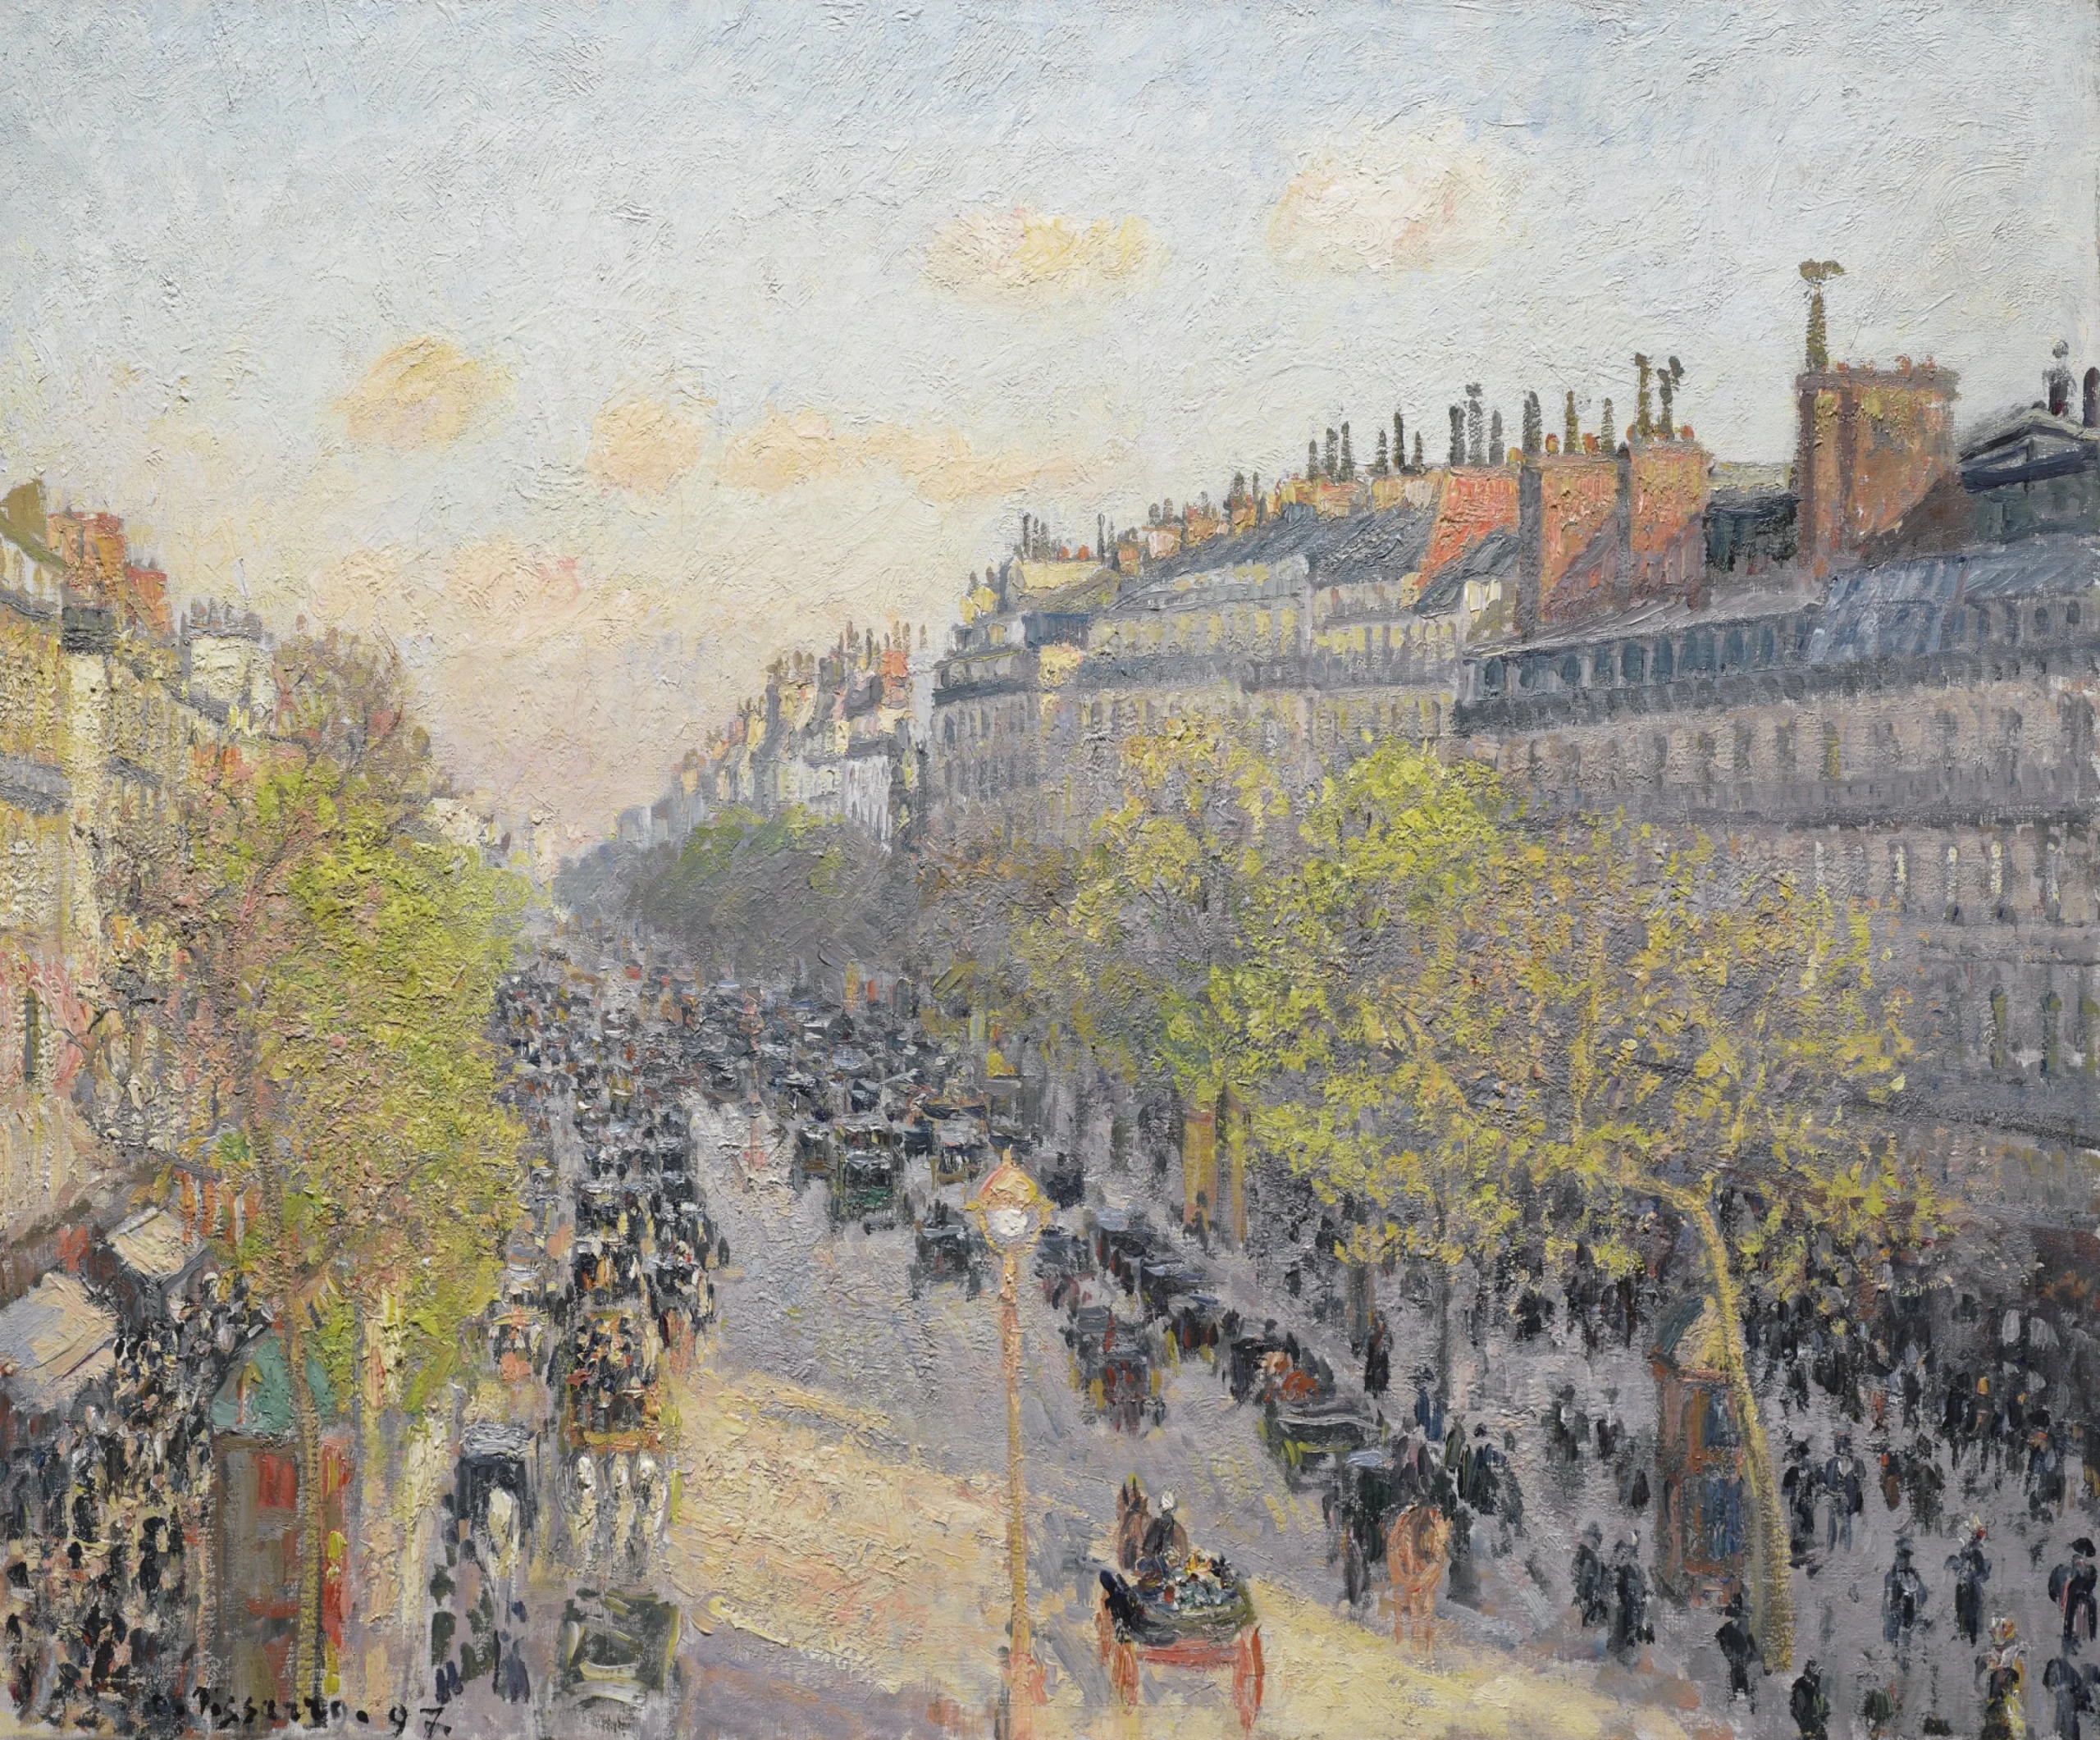 Camille Pissarro Le Boulevard Montmartre, fin de journée signed C. Pissarro and dated 97 (lower left) oil on canvas